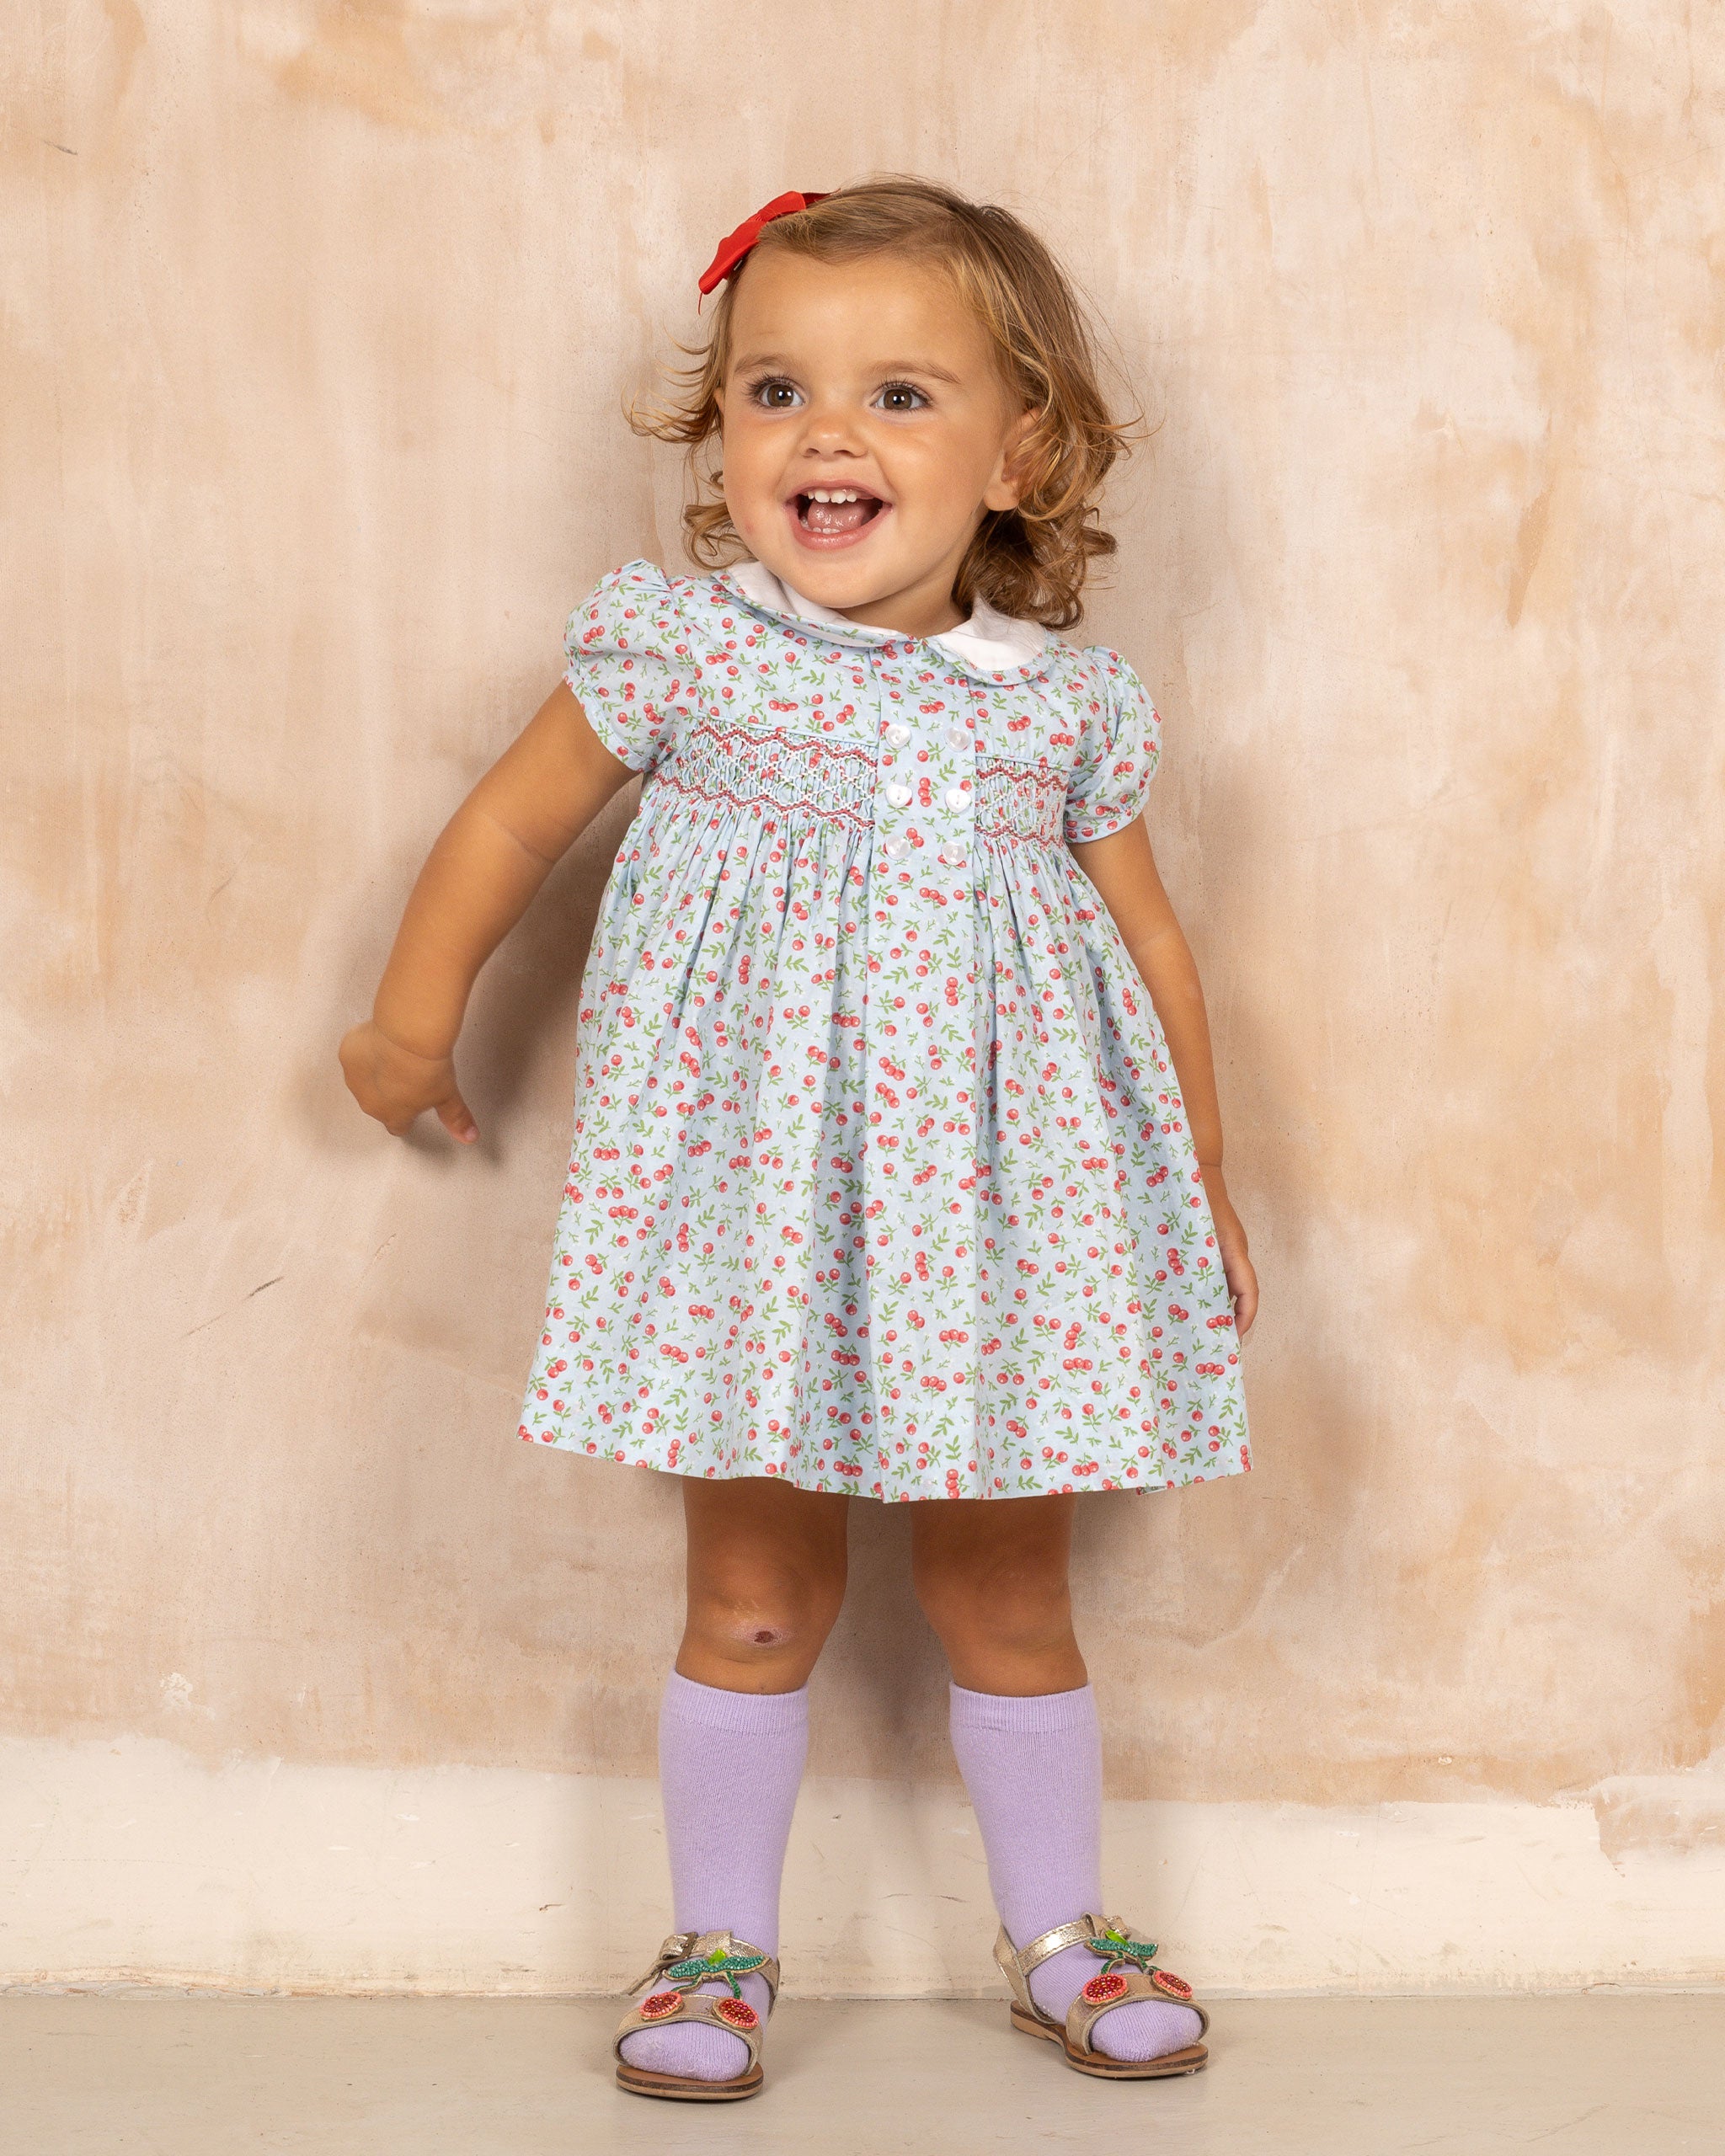 toddler in hand-smocked cherry print dress